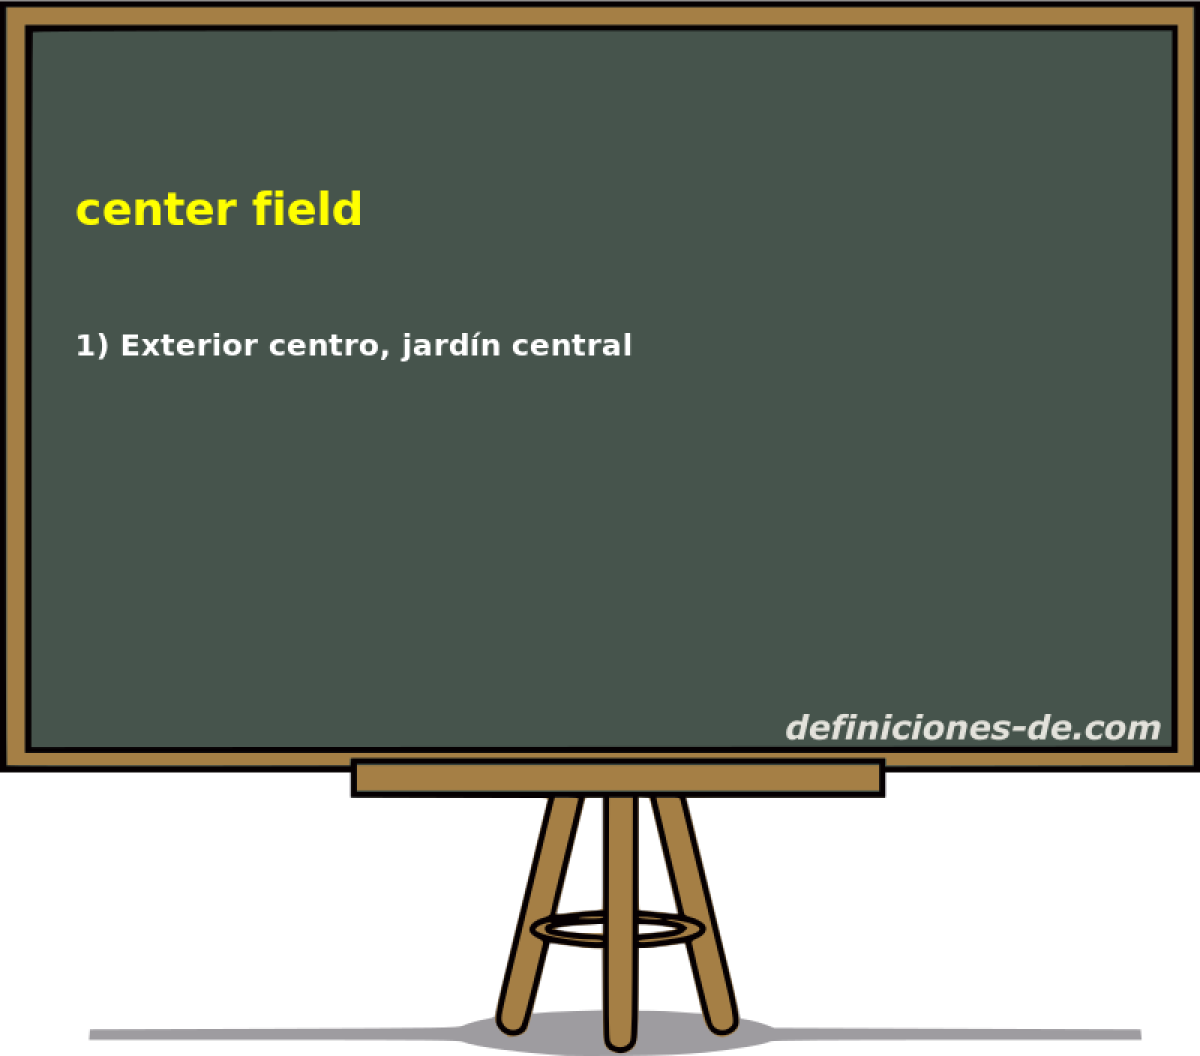 center field 